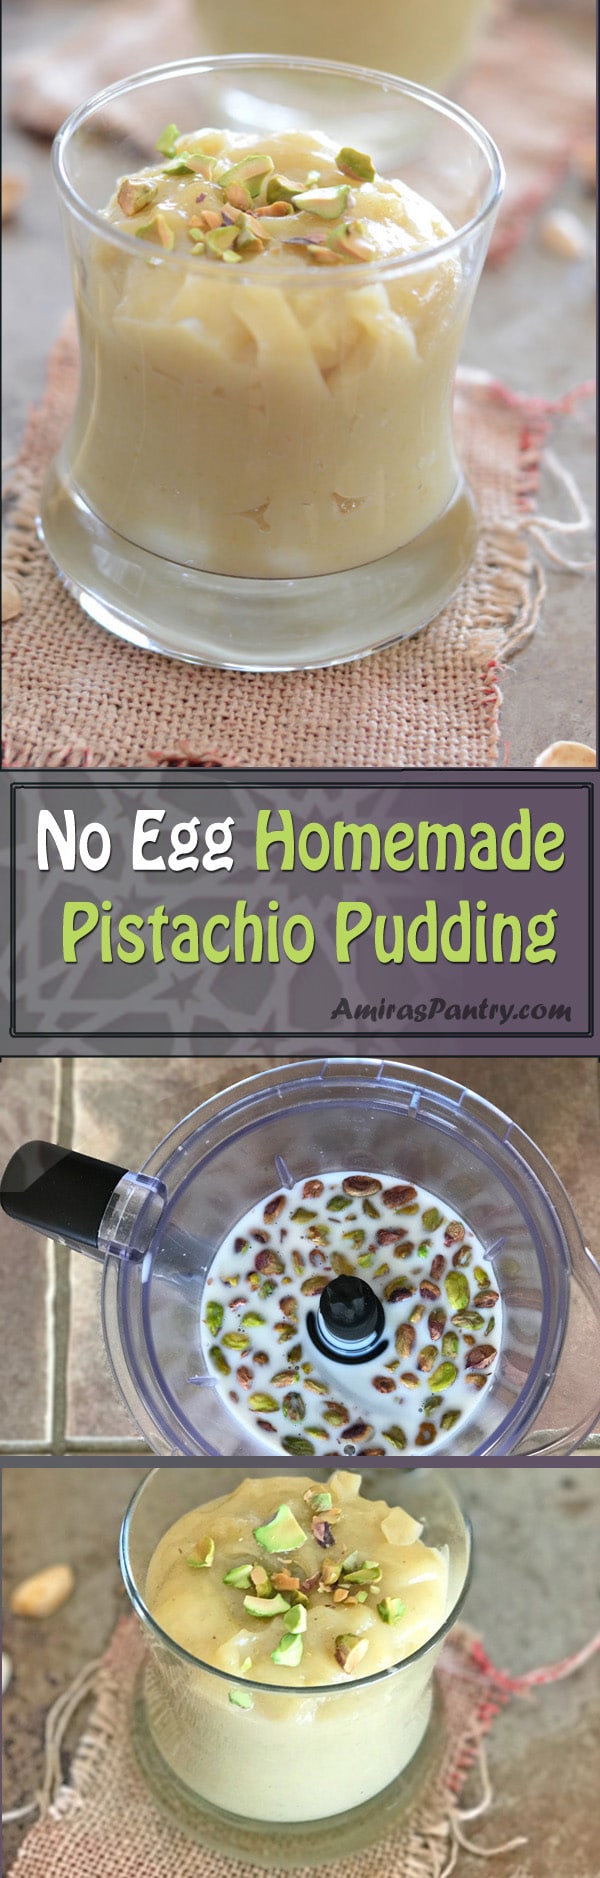 An infograph of Pistachio pudding recipe